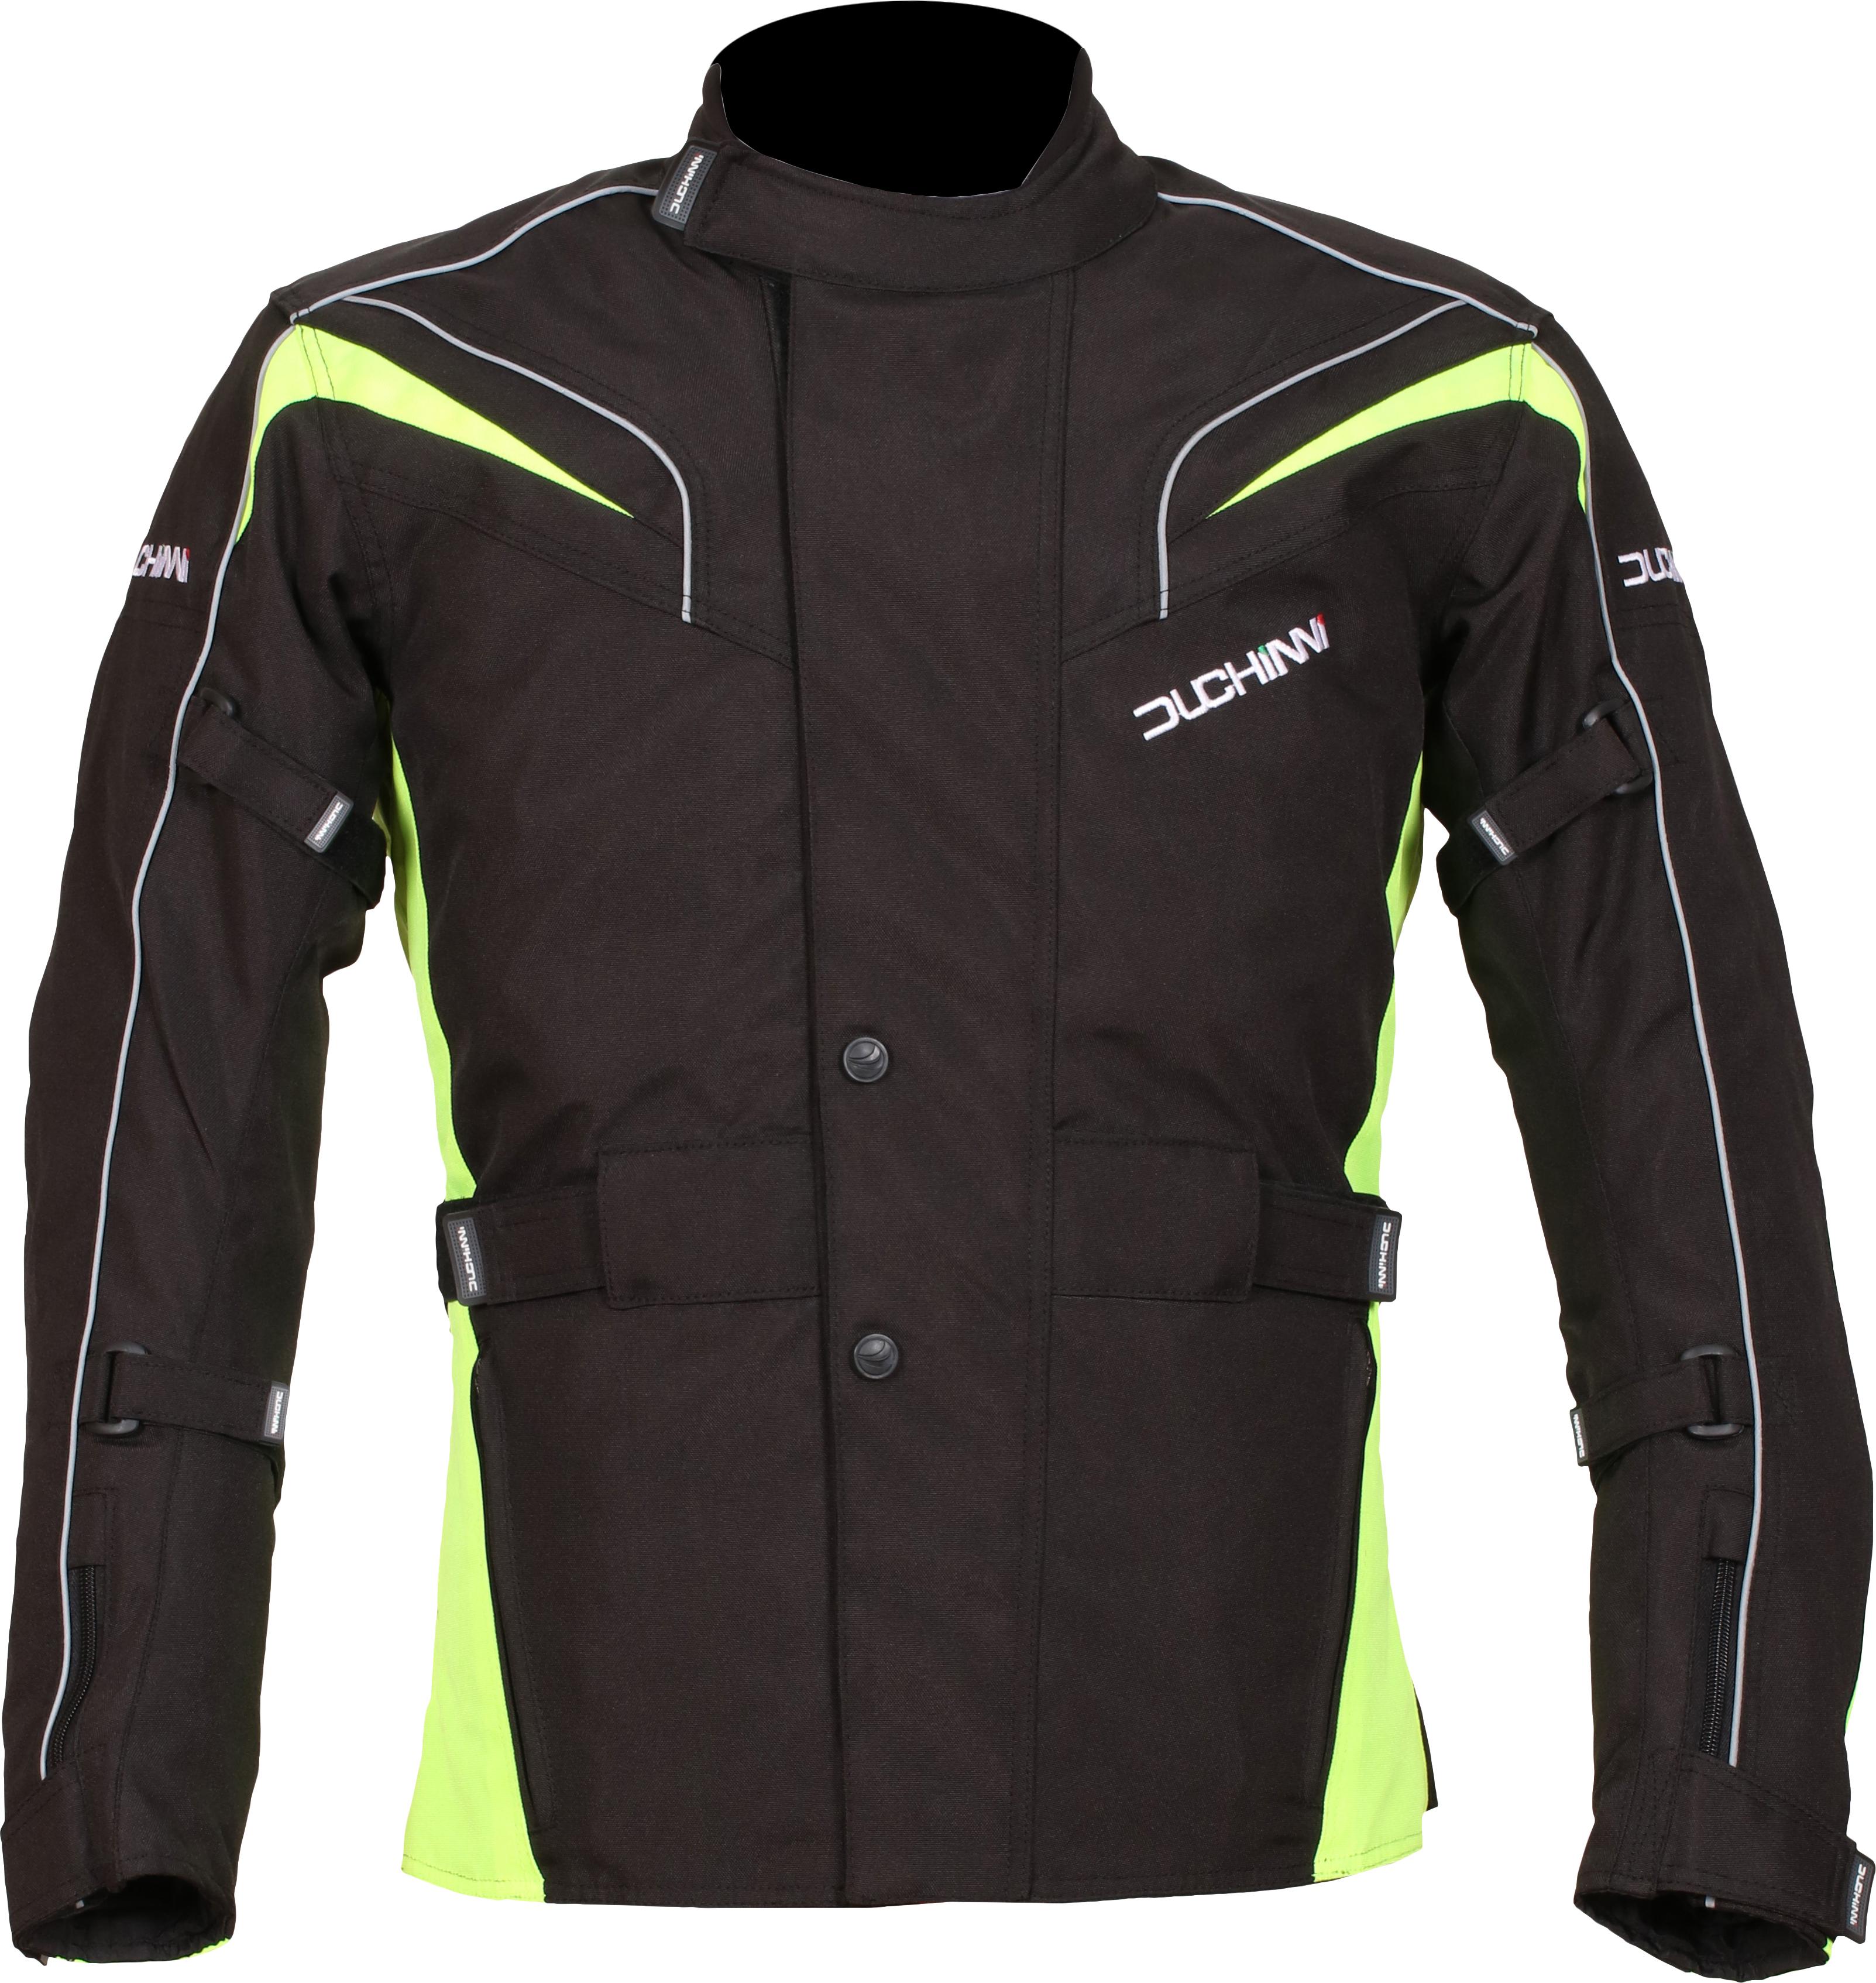 Duchinni Hurricane Motorcycle Jacket - Black And Neon, 2Xl